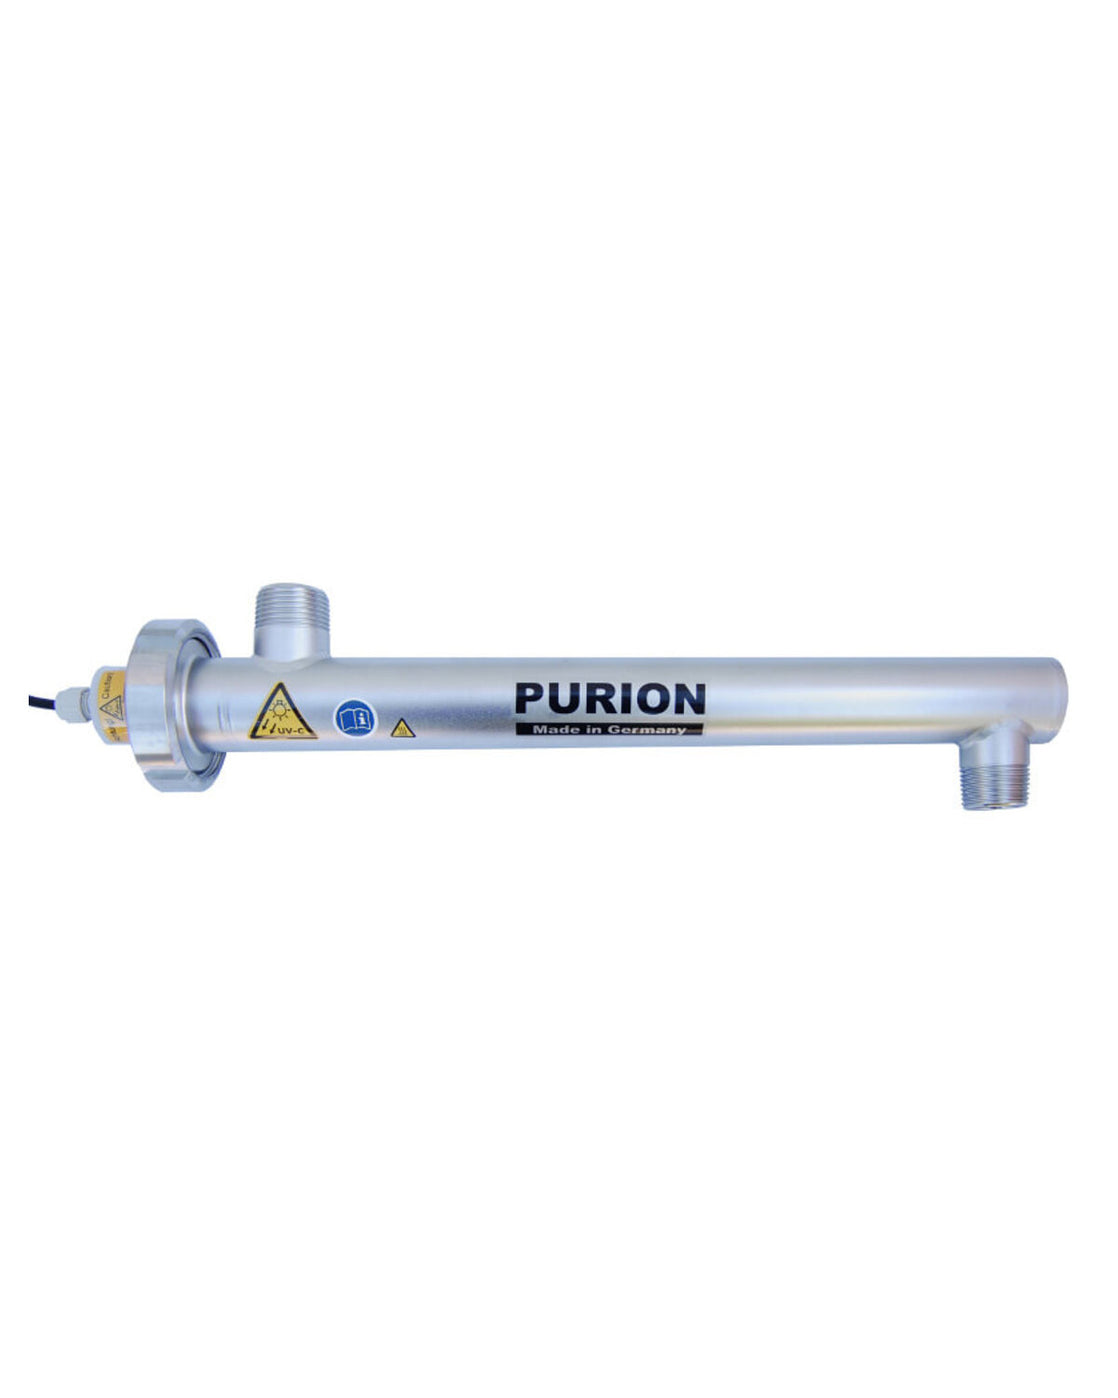 PURION 1000 110 - 240 V AC Basic